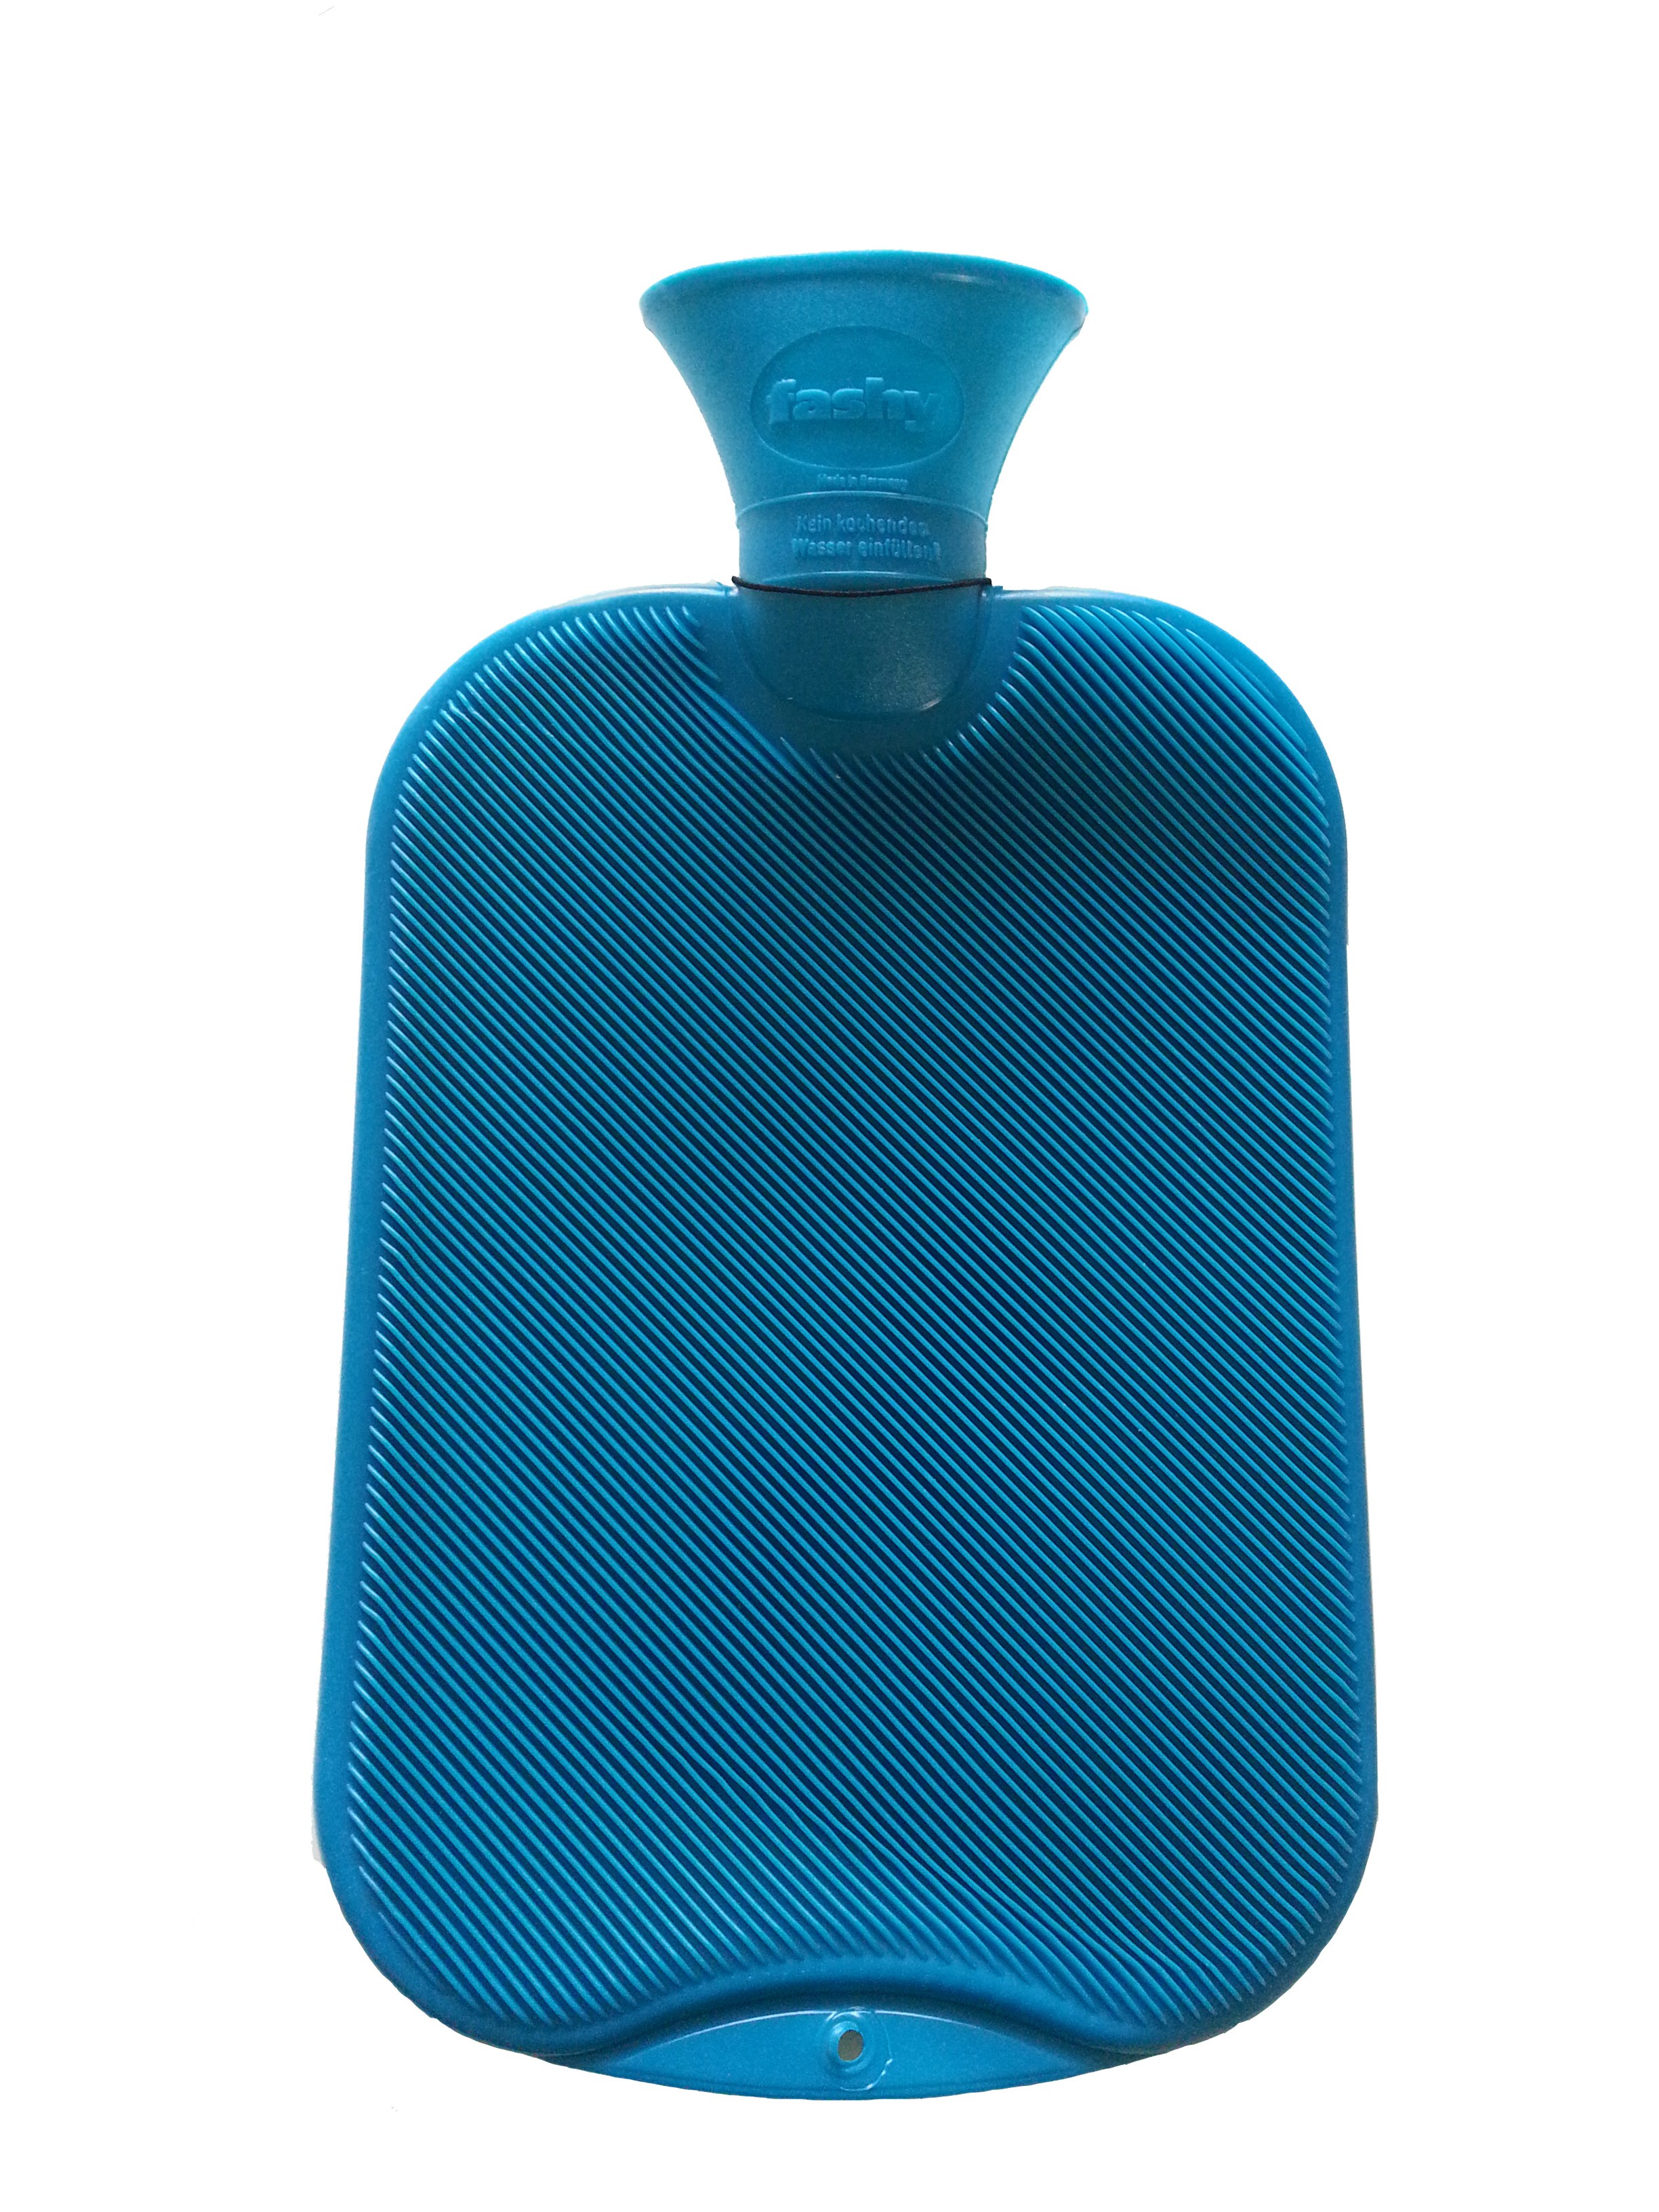 Fashy kruik 2 liter | Groen / Blauw | Enkelzijdig geribbeld